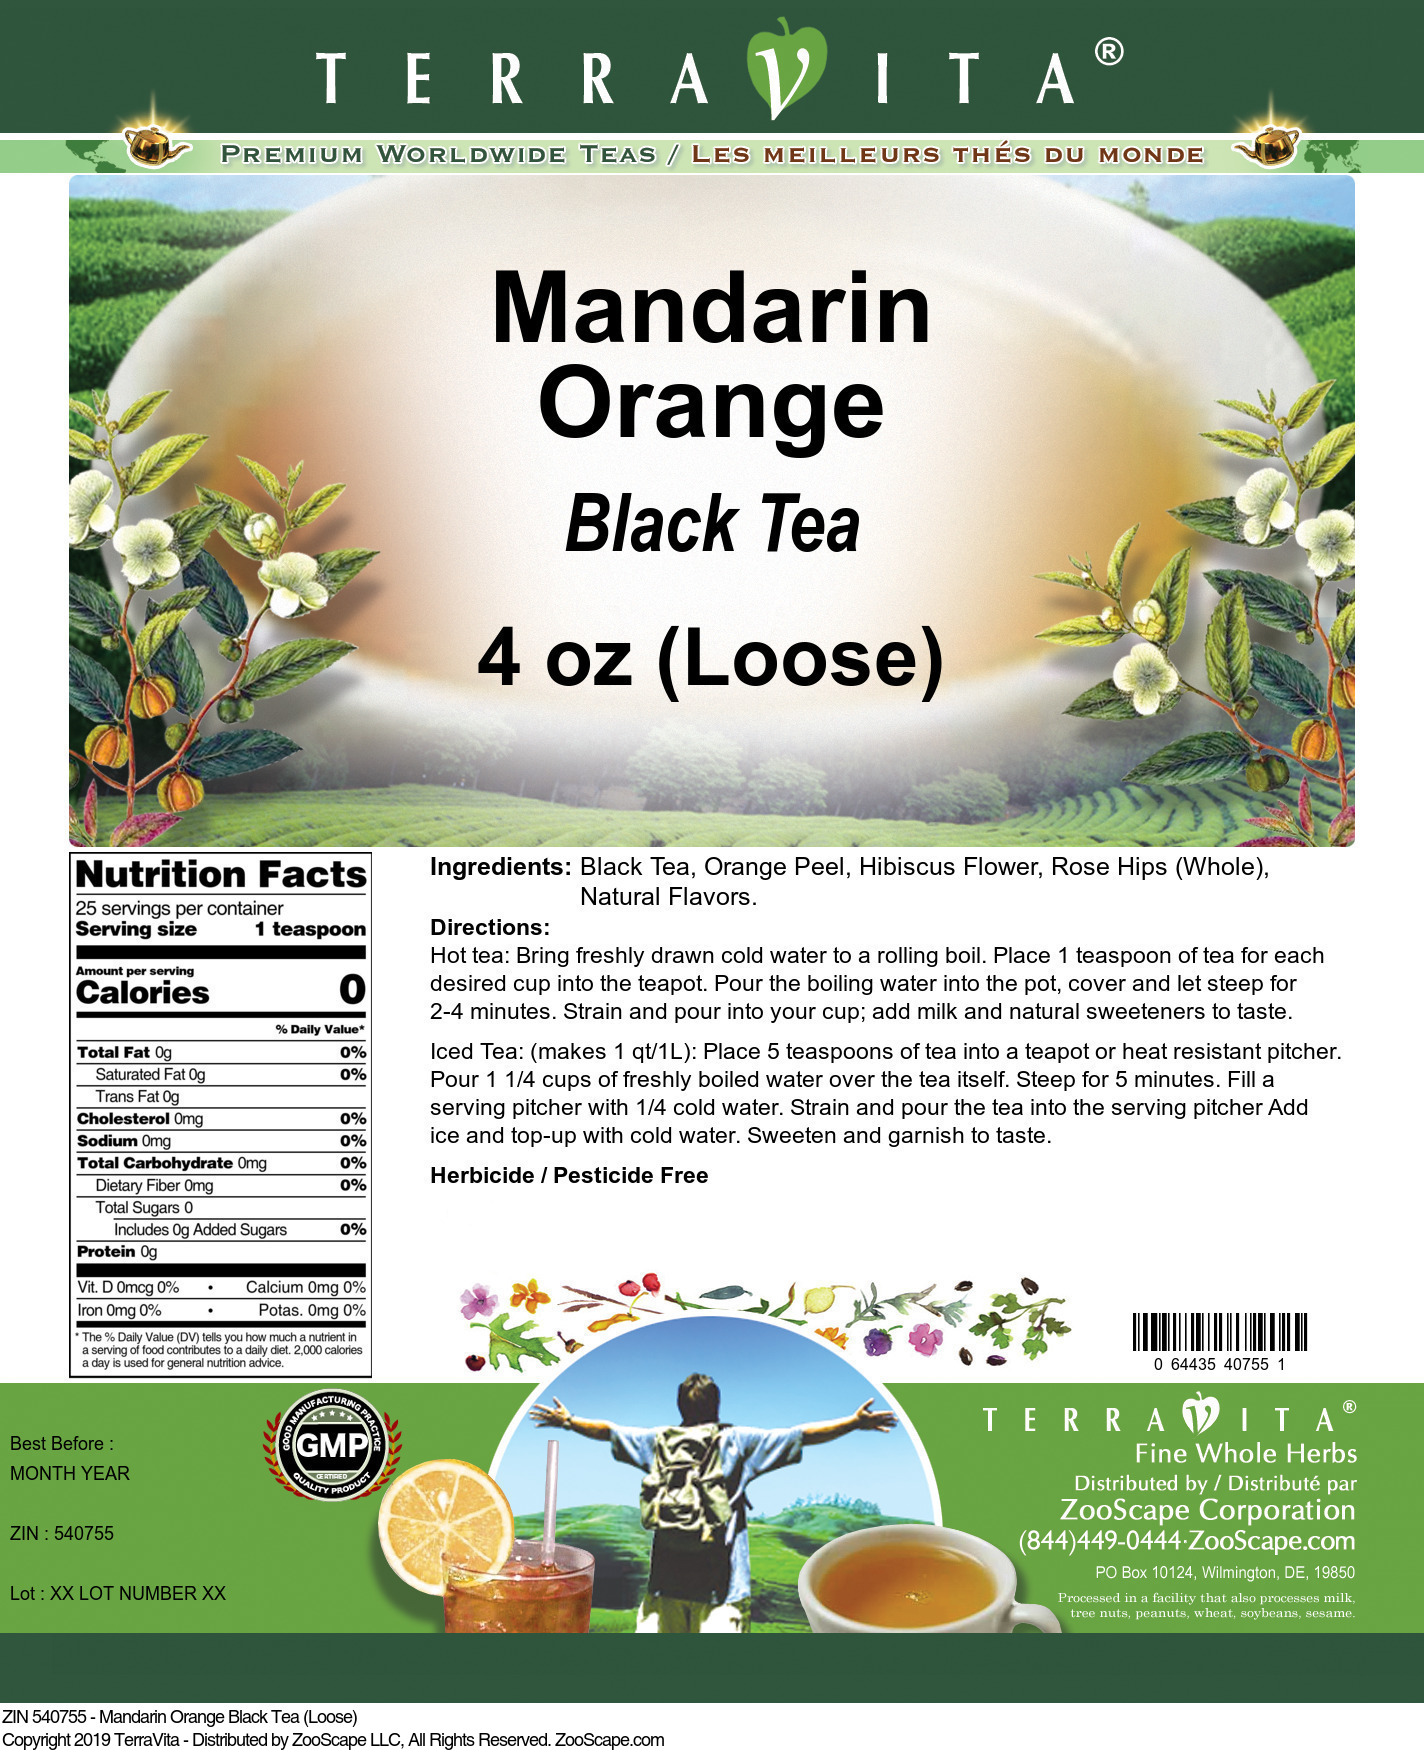 Mandarin Orange Black Tea (Loose) - Label